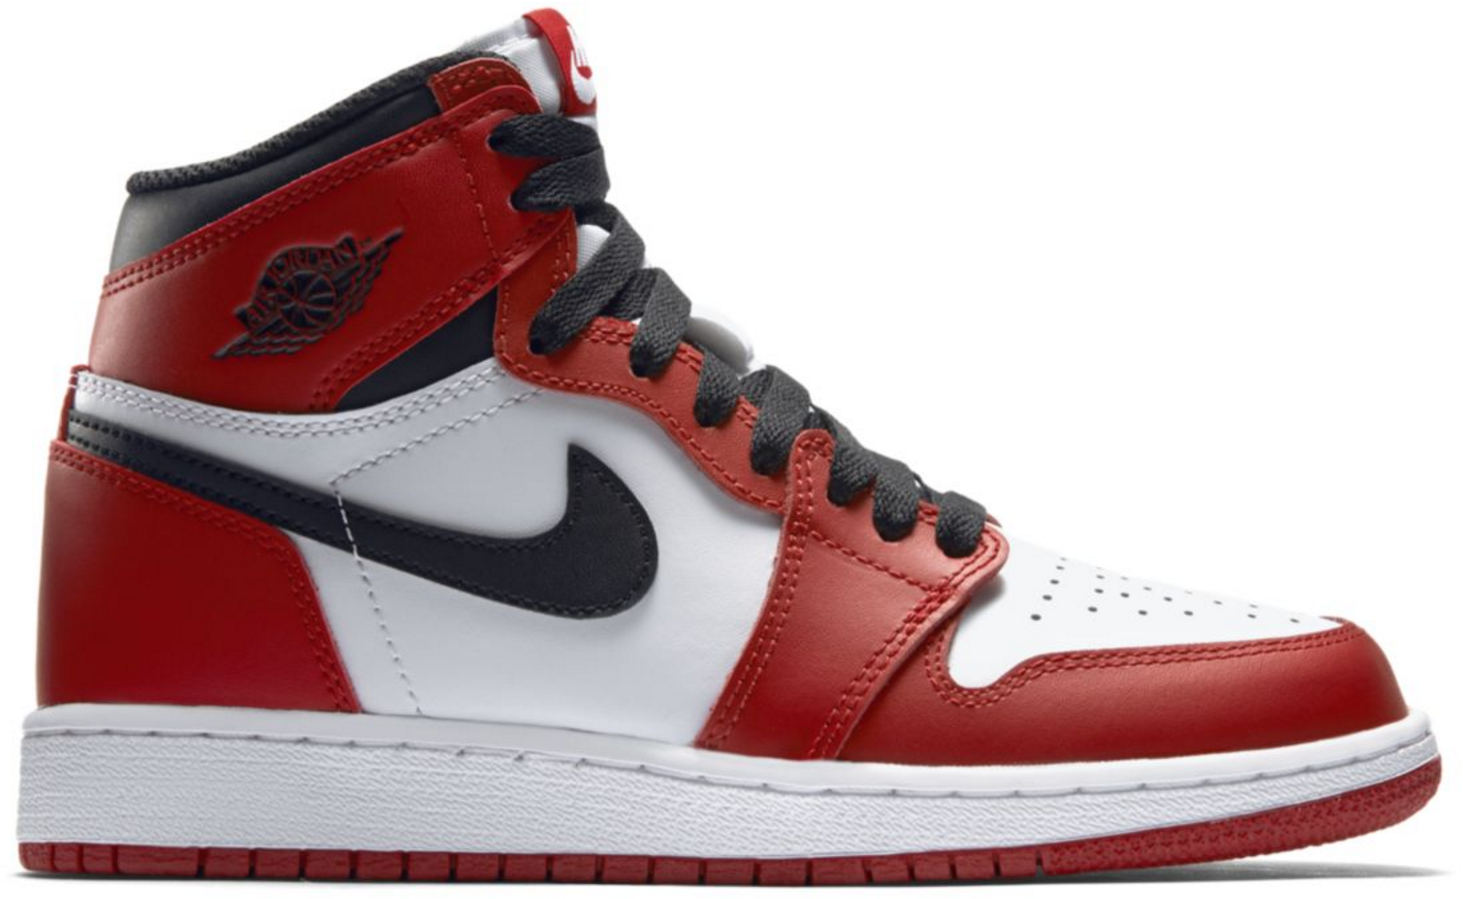 Jordan 1 Retro Chicago (2015) (GS) sneakers